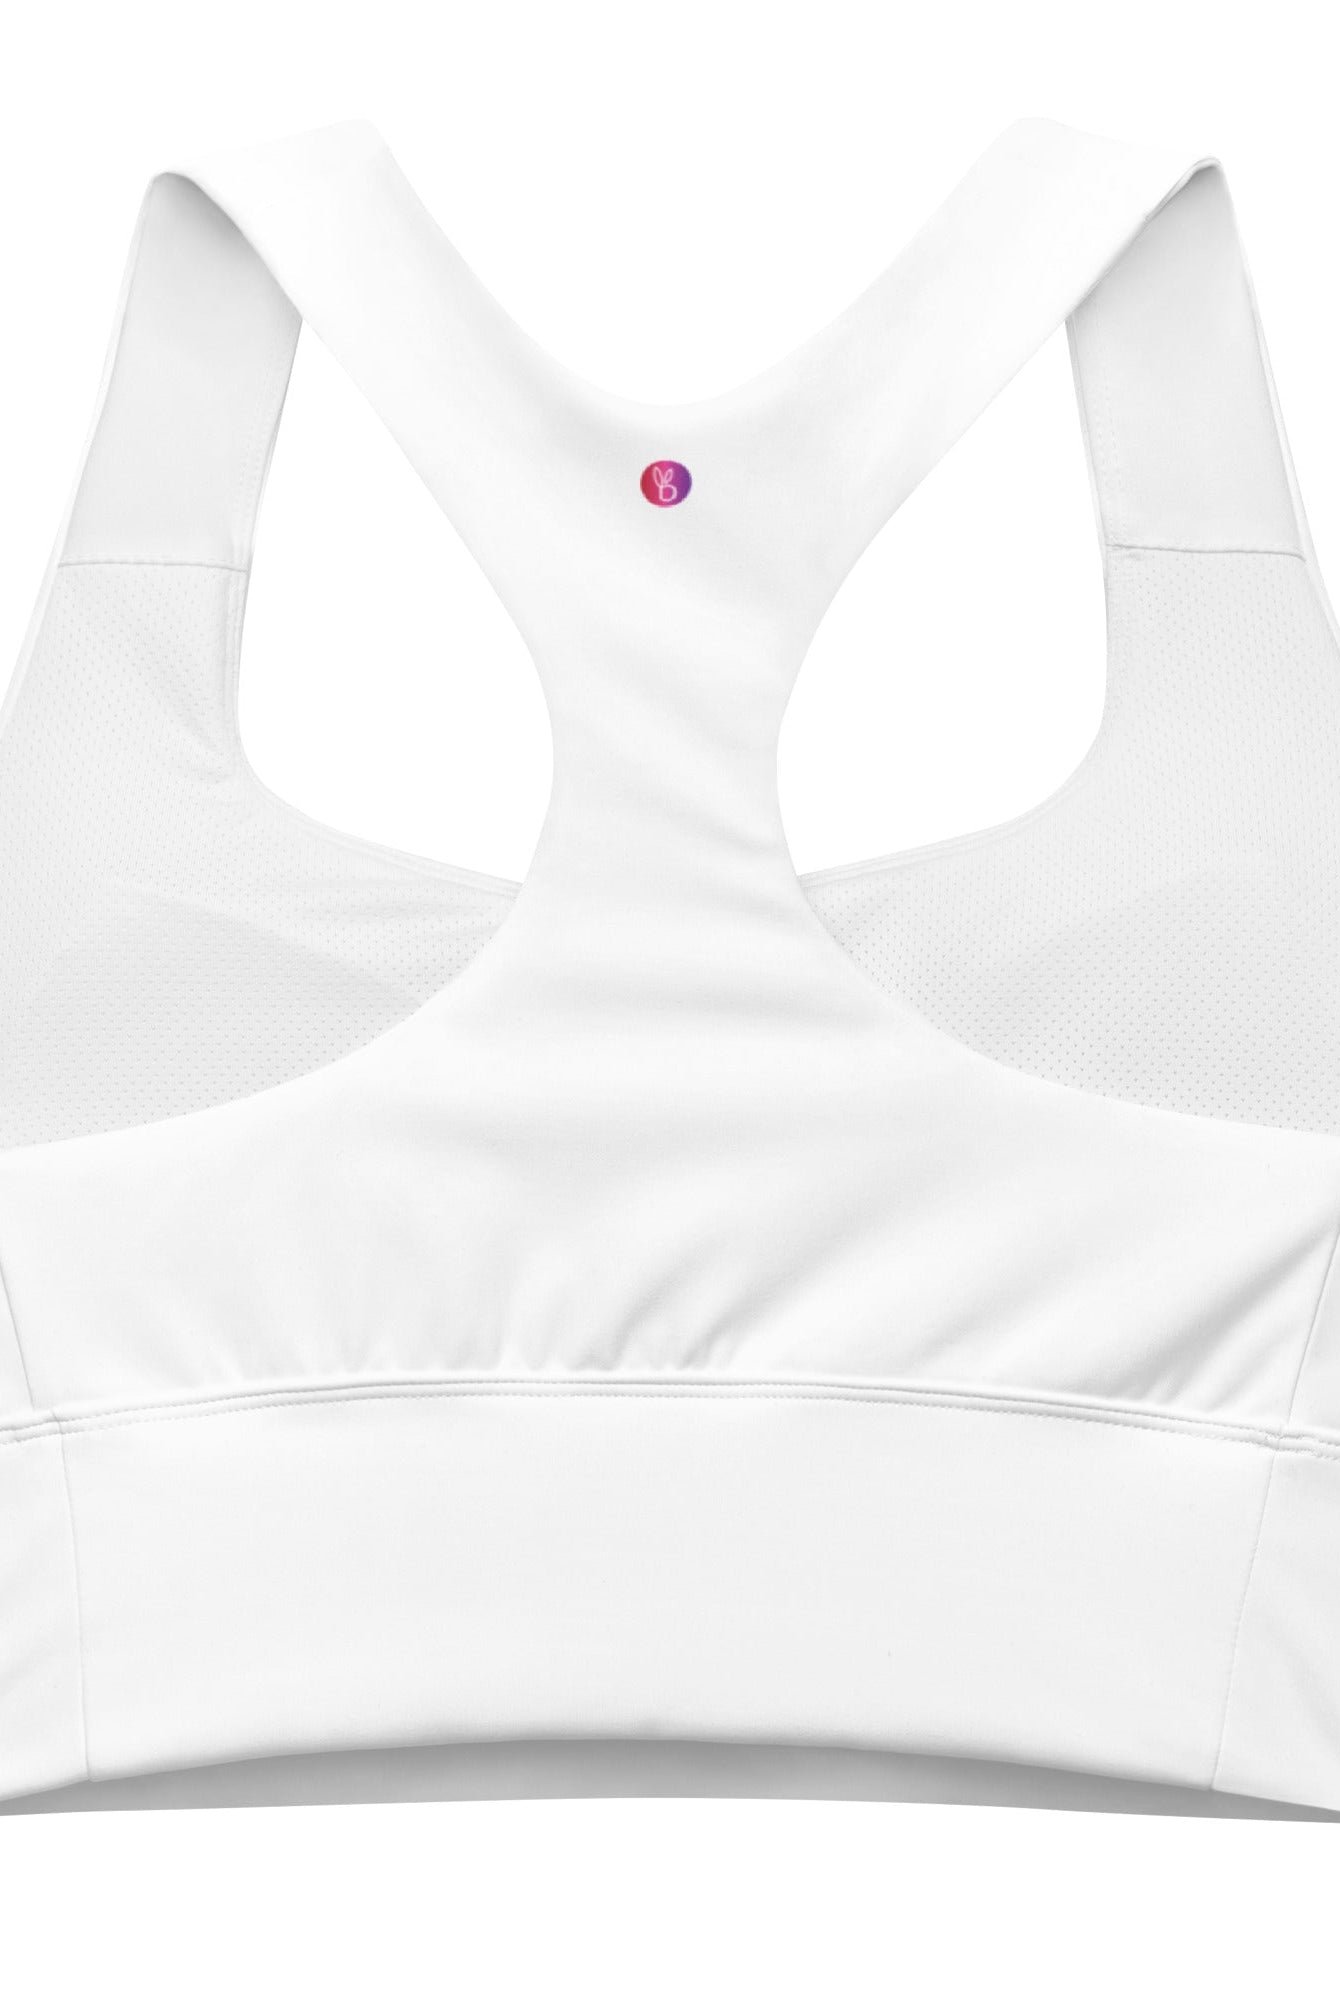 Bellybunny-Women's Longline Sports Bra-White with Pink Logo